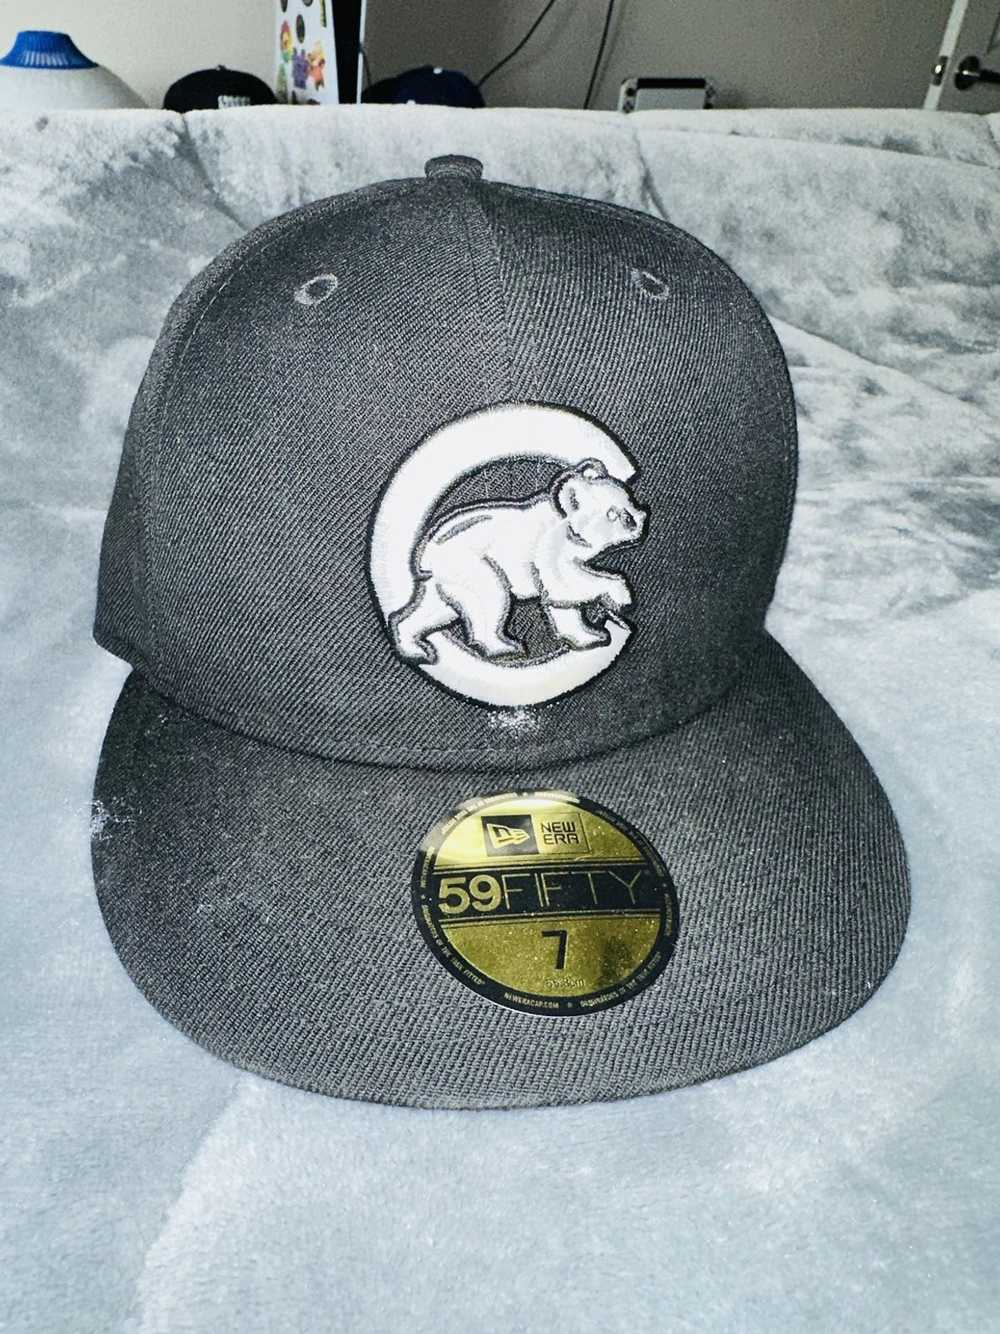 New Era Chicago cubs hat - image 1